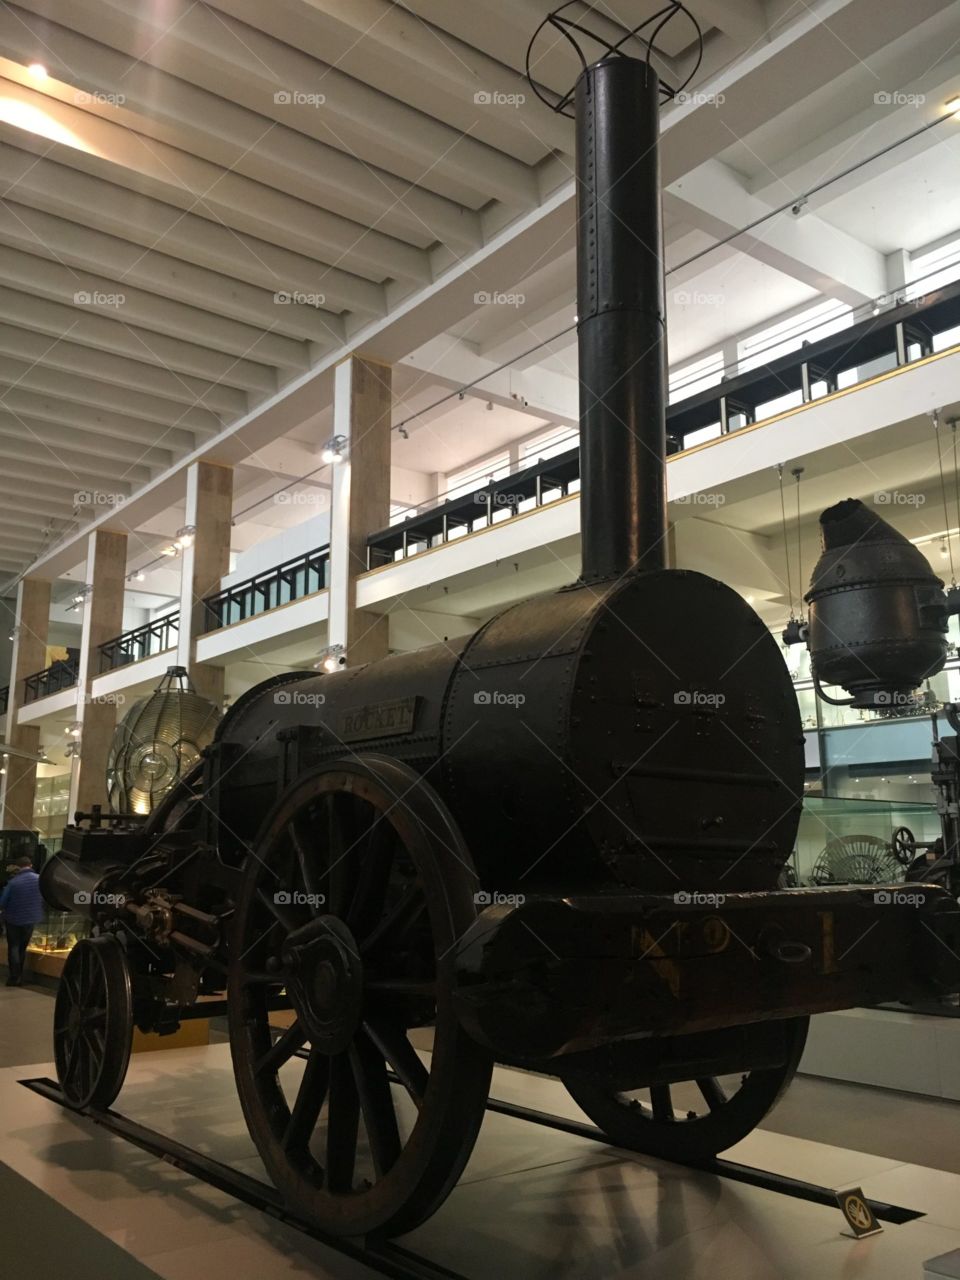 George Stephenson's rocket housed in the science museum London